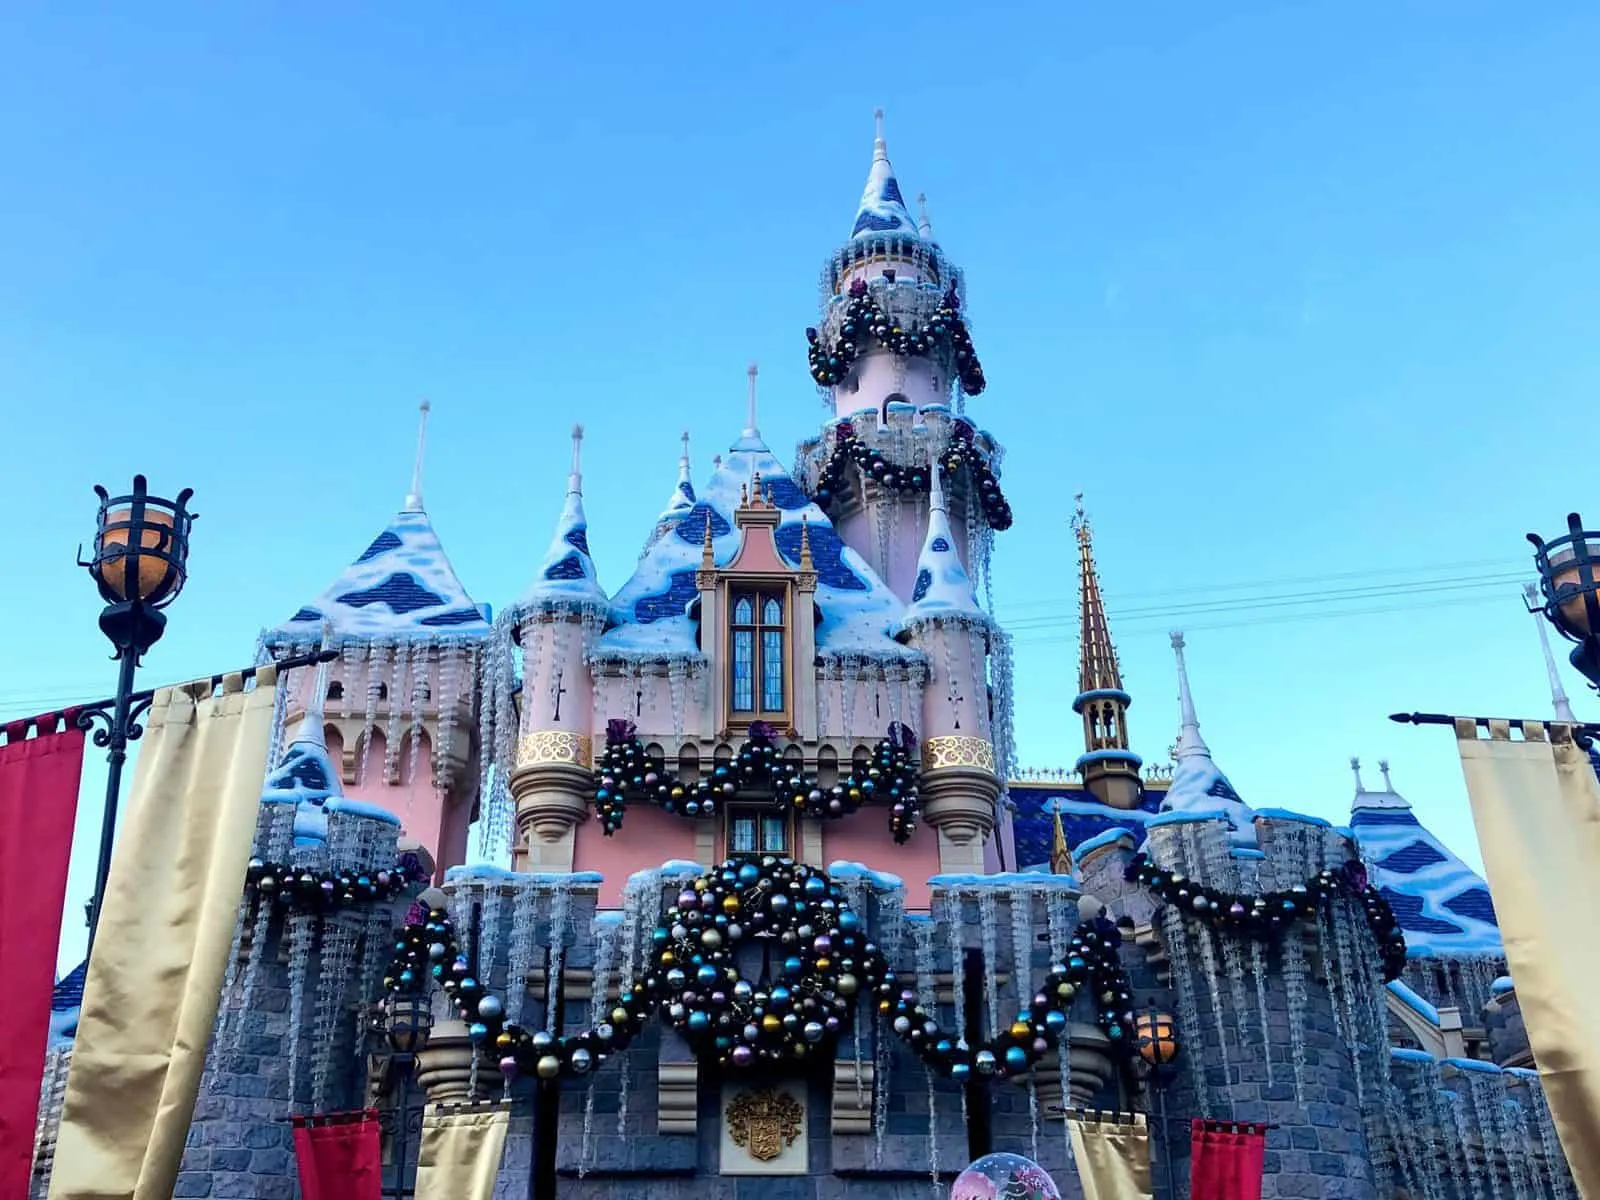 Disneyland Park Special Events (holidays & other celebrations)